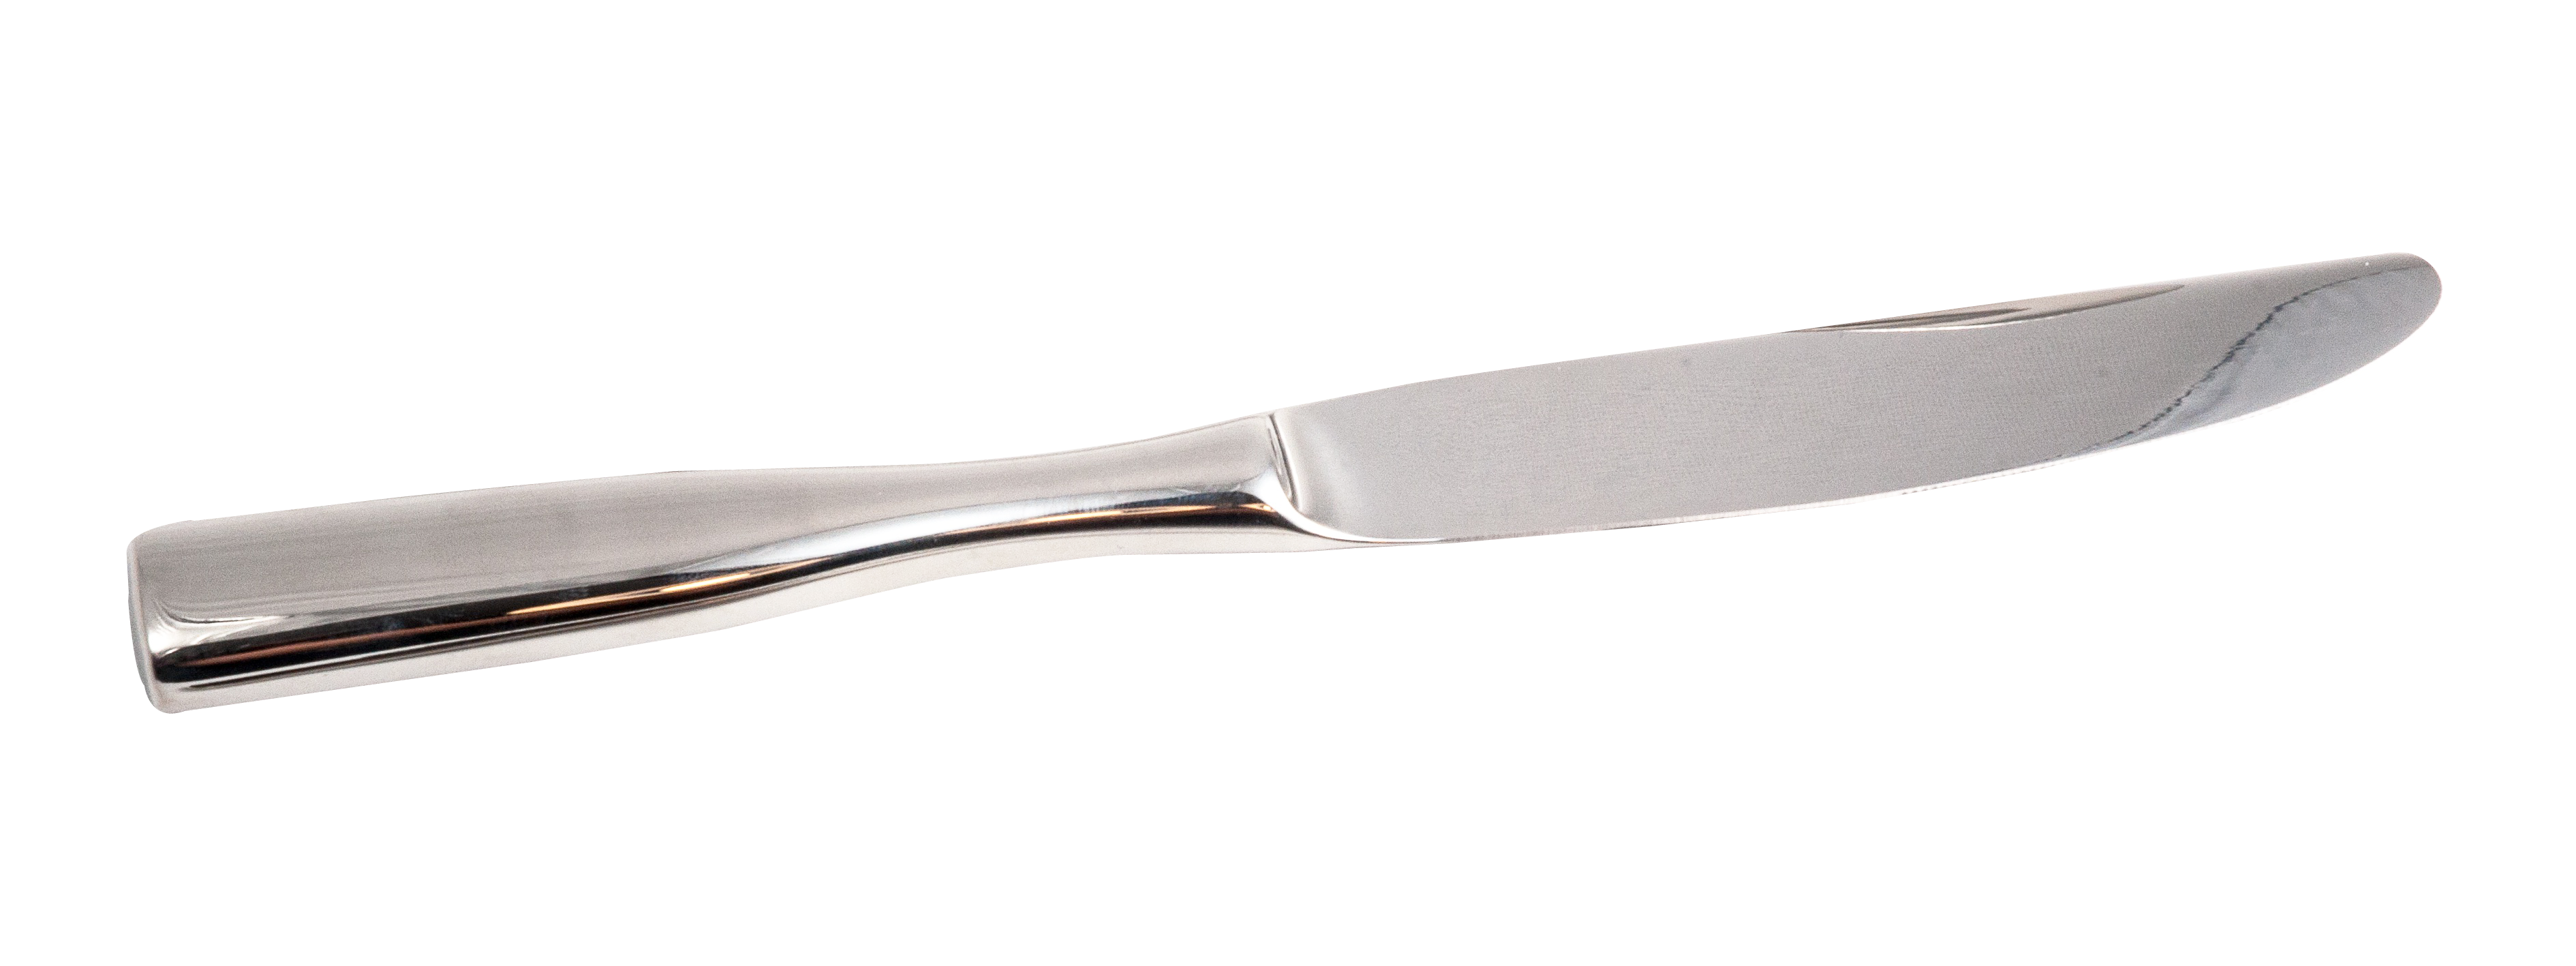 knife clipart transparent background